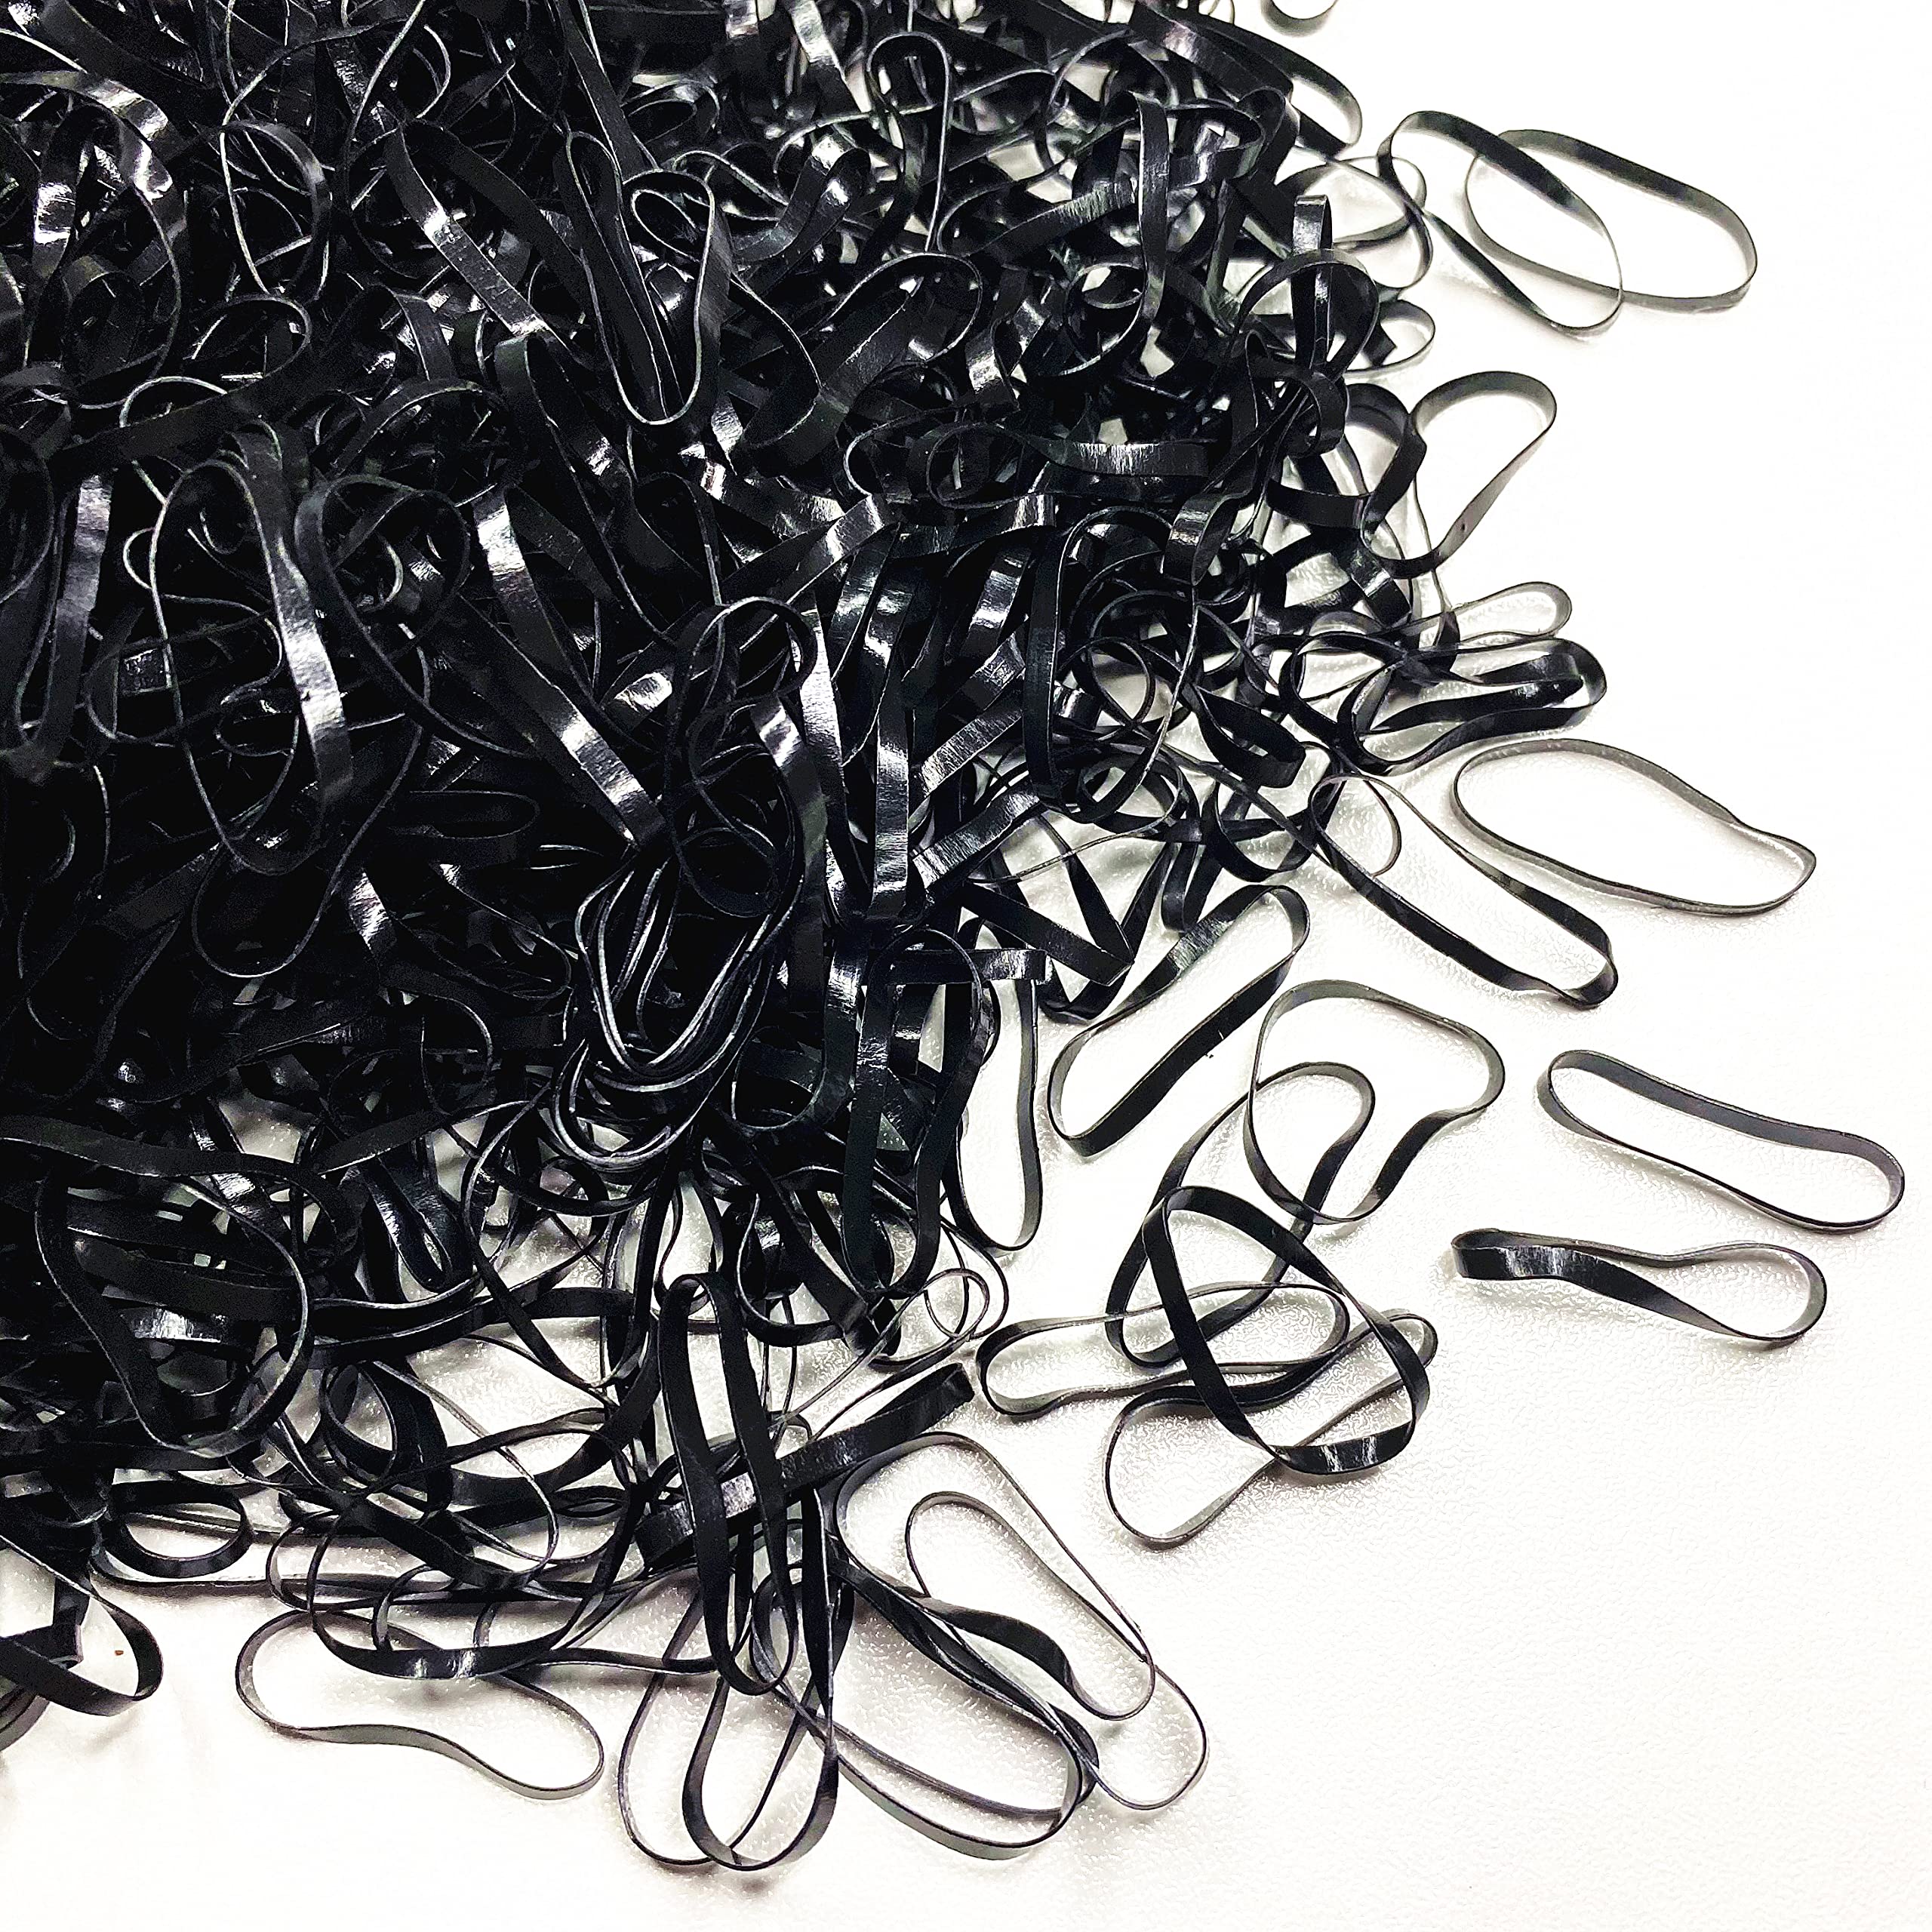 1000pcs Black Disposable Mini Rubber Bands In Convenient Bag, High